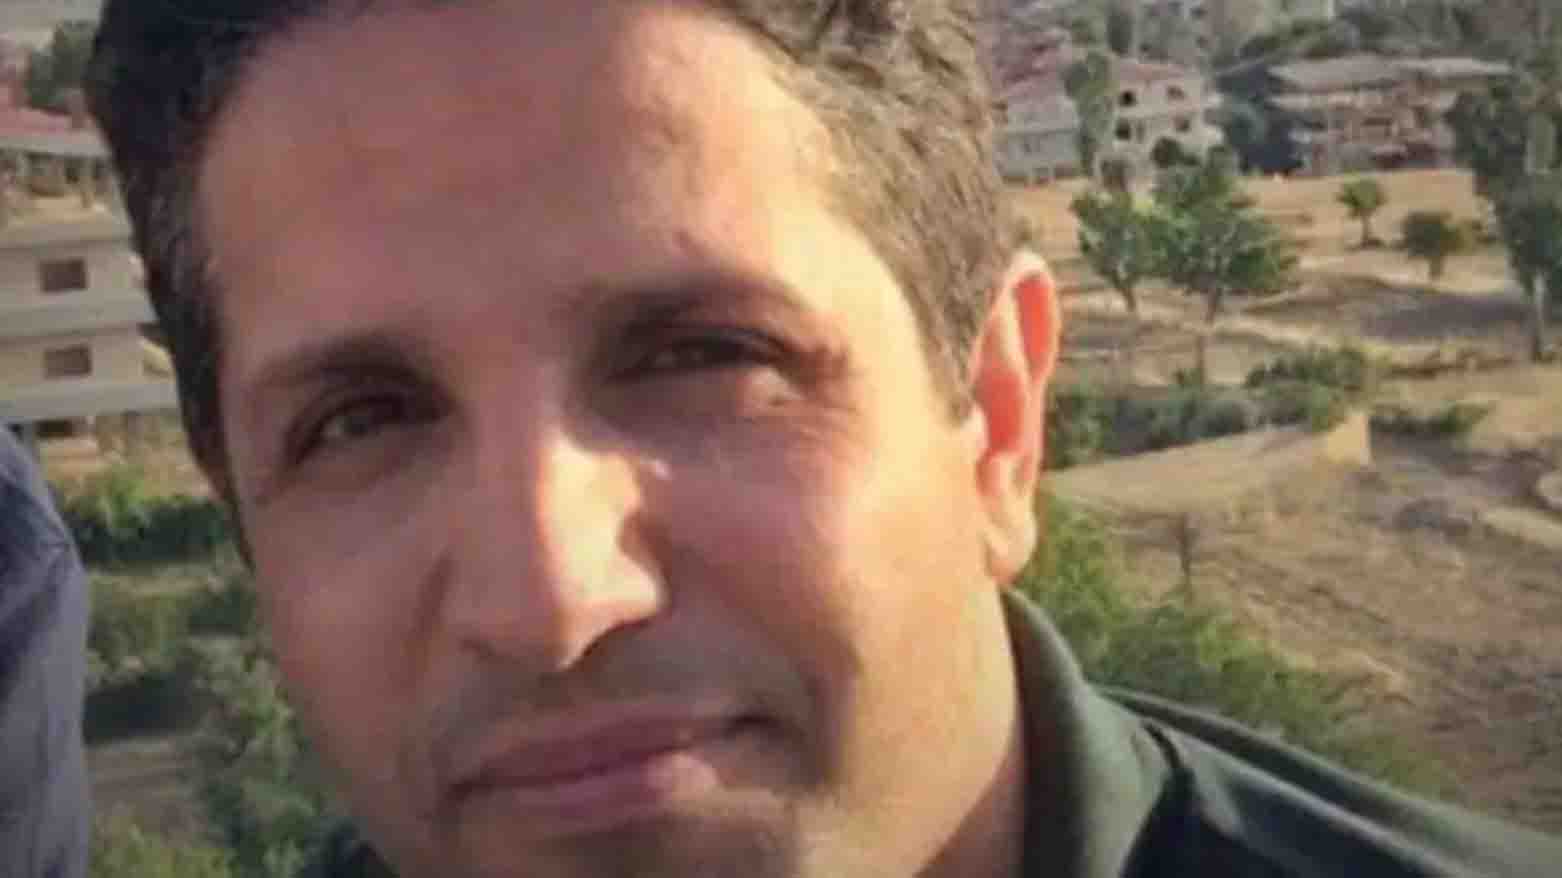 İsrail’in Şam sadırısında yaşamını yitiren İranlı askeri danışman Said Alidadi'nin fotoğrafı